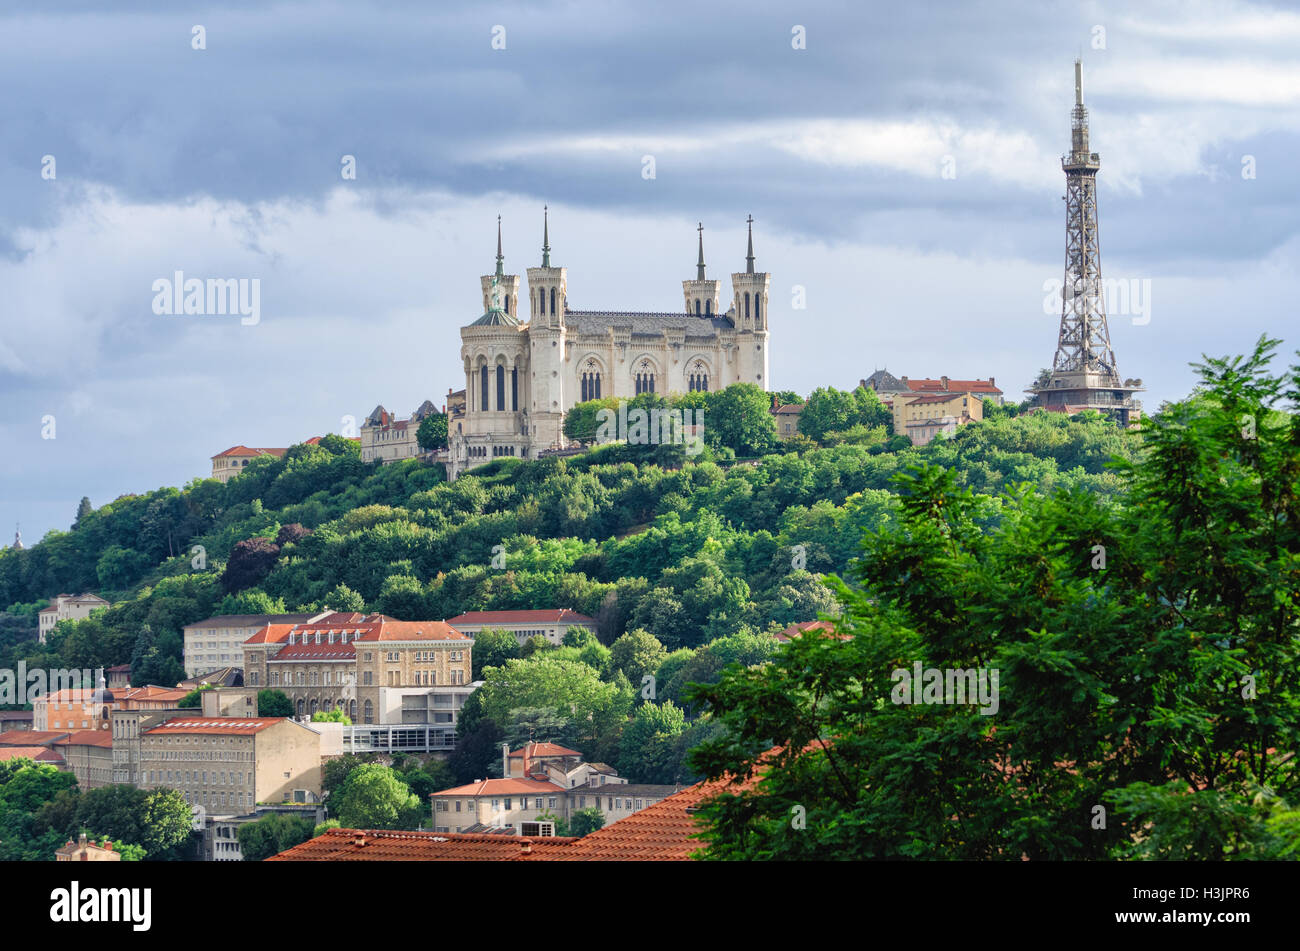 Lyon (France) Notre-Dame de Fourviere and metallic tower Stock Photo